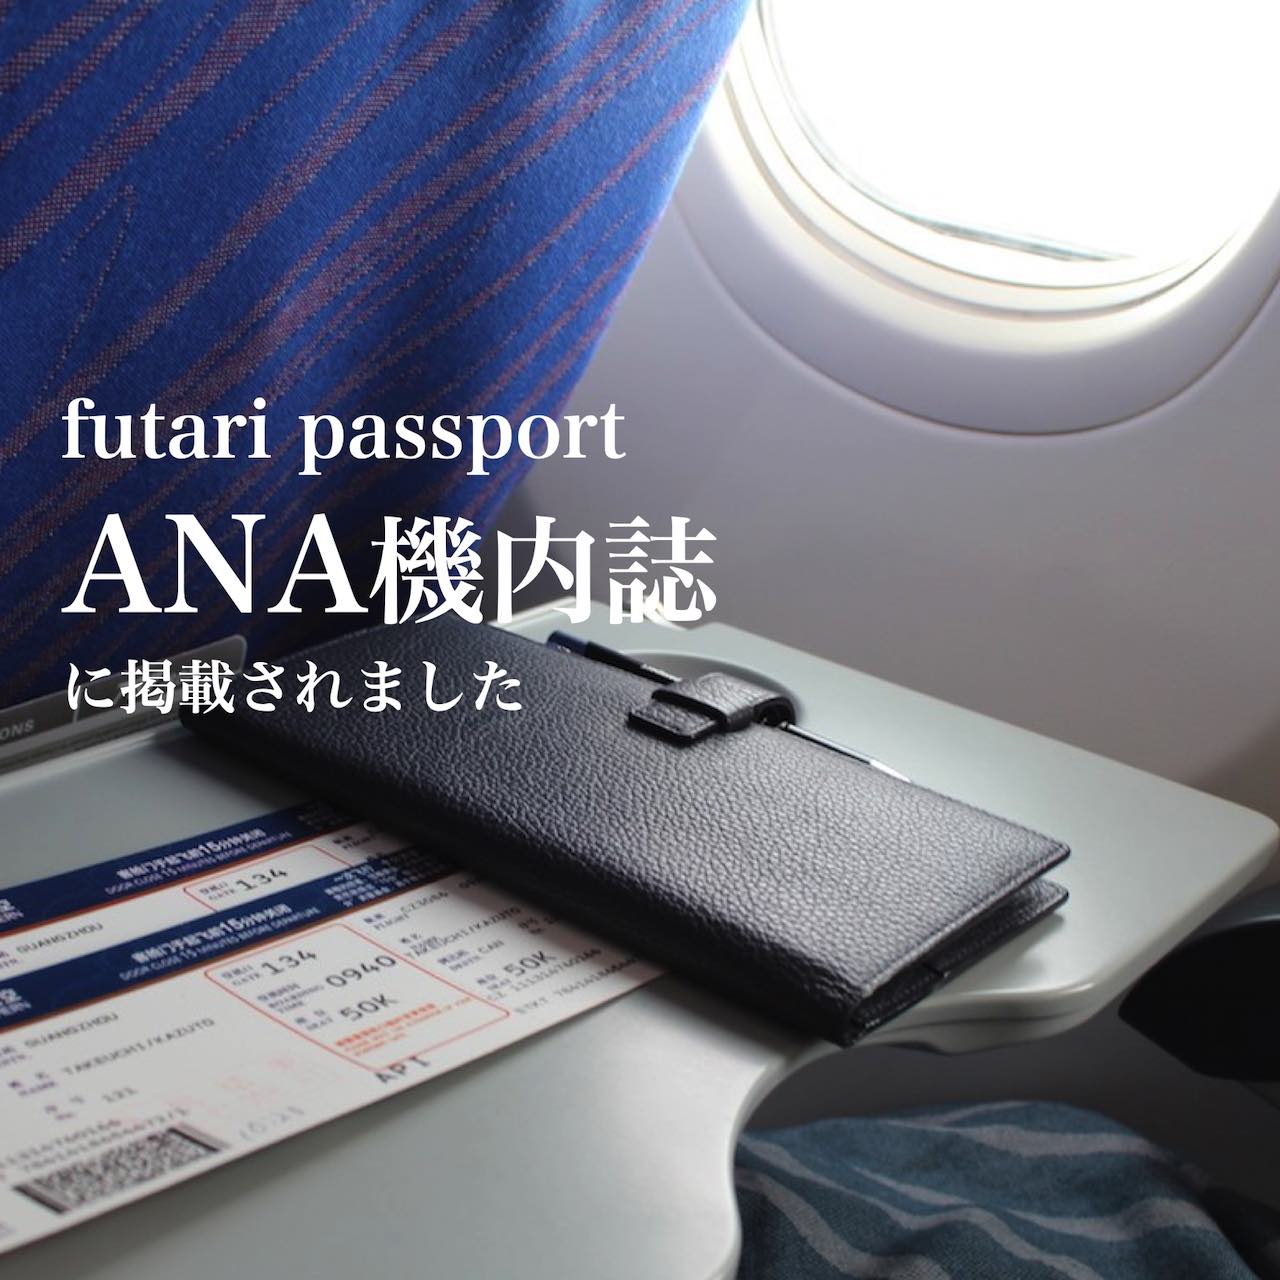 futari passport ANA機内誌掲載